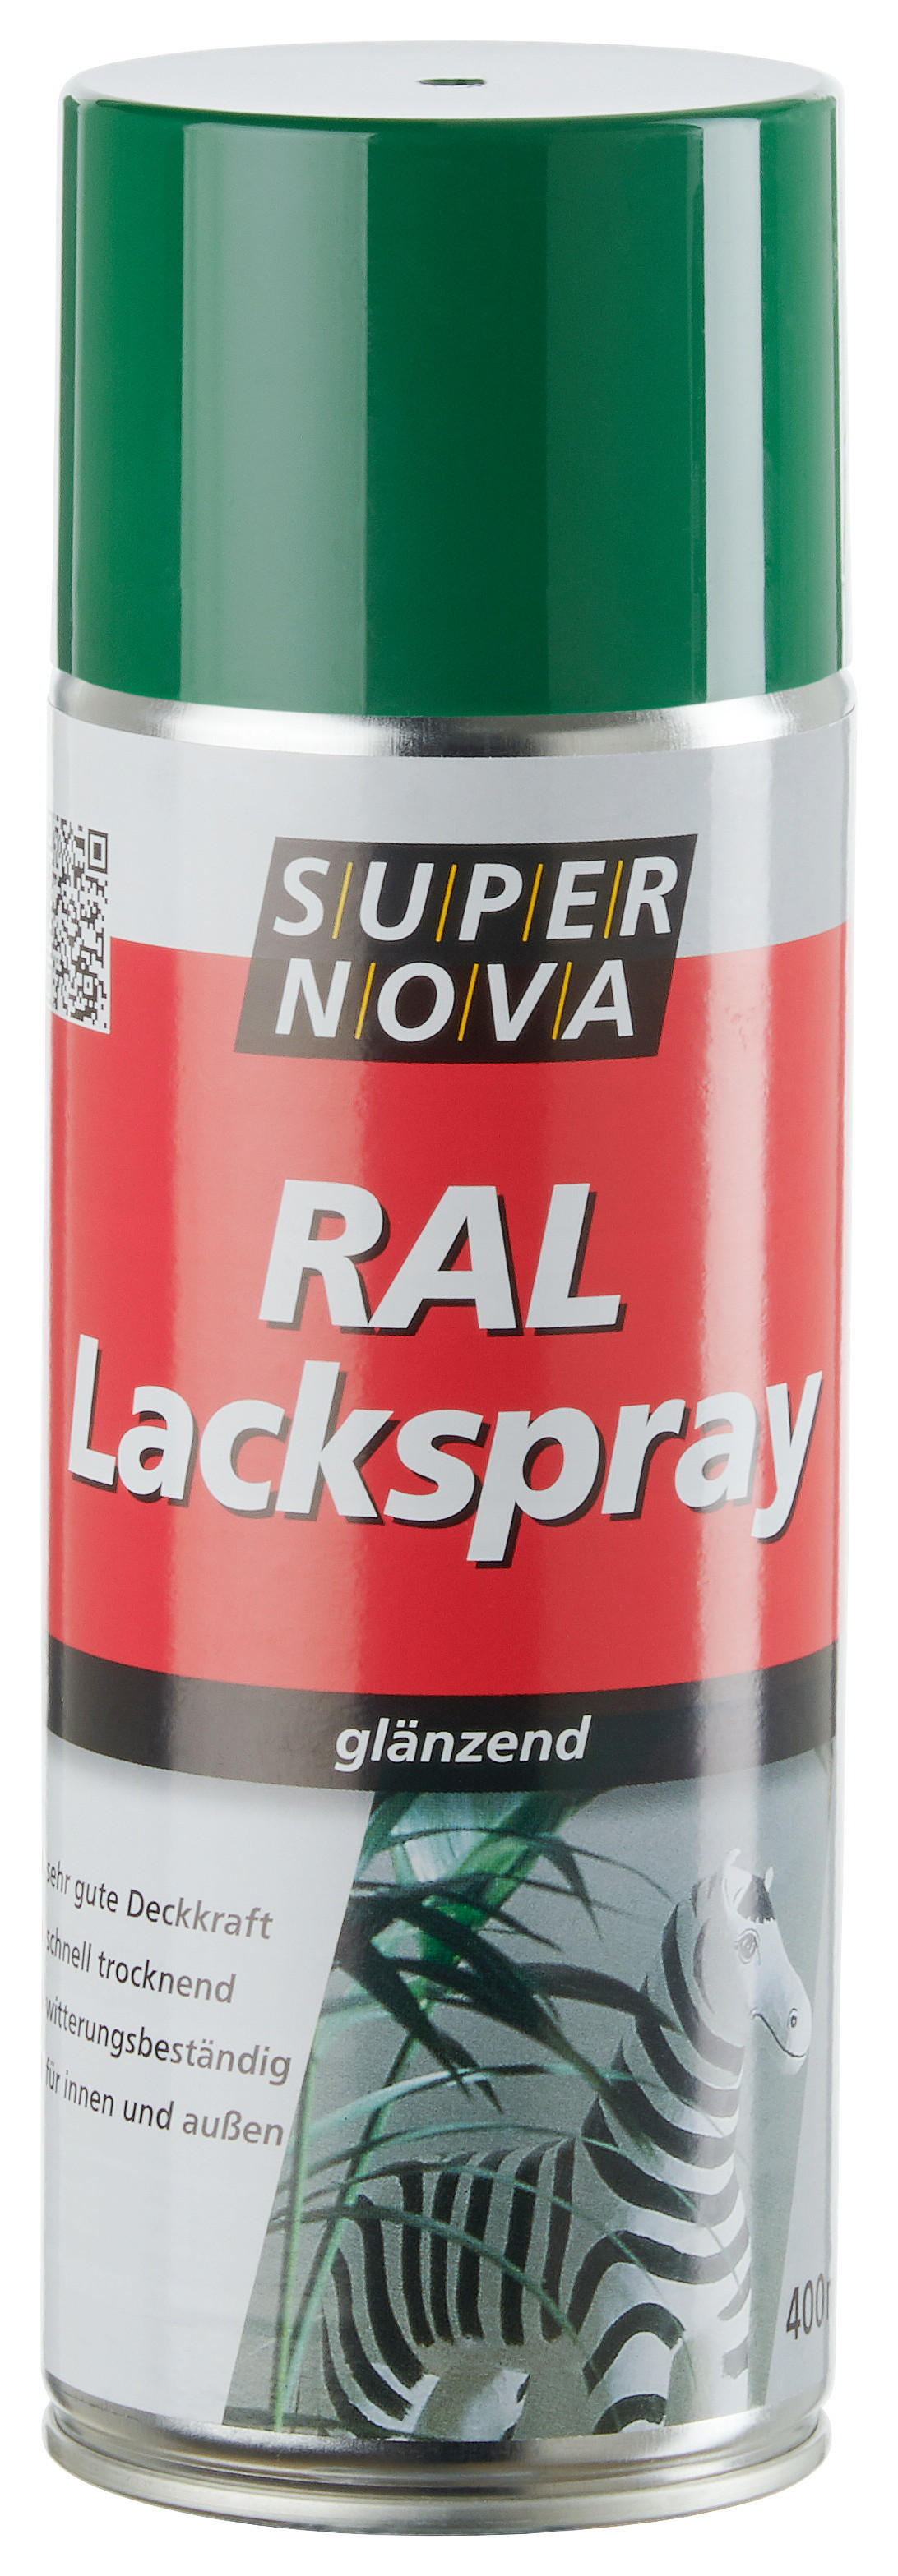 Super-Nova Lackspray moosgrün glänzend ca. 0,4 l Lackspray 400ml - moosgrün (400ml)